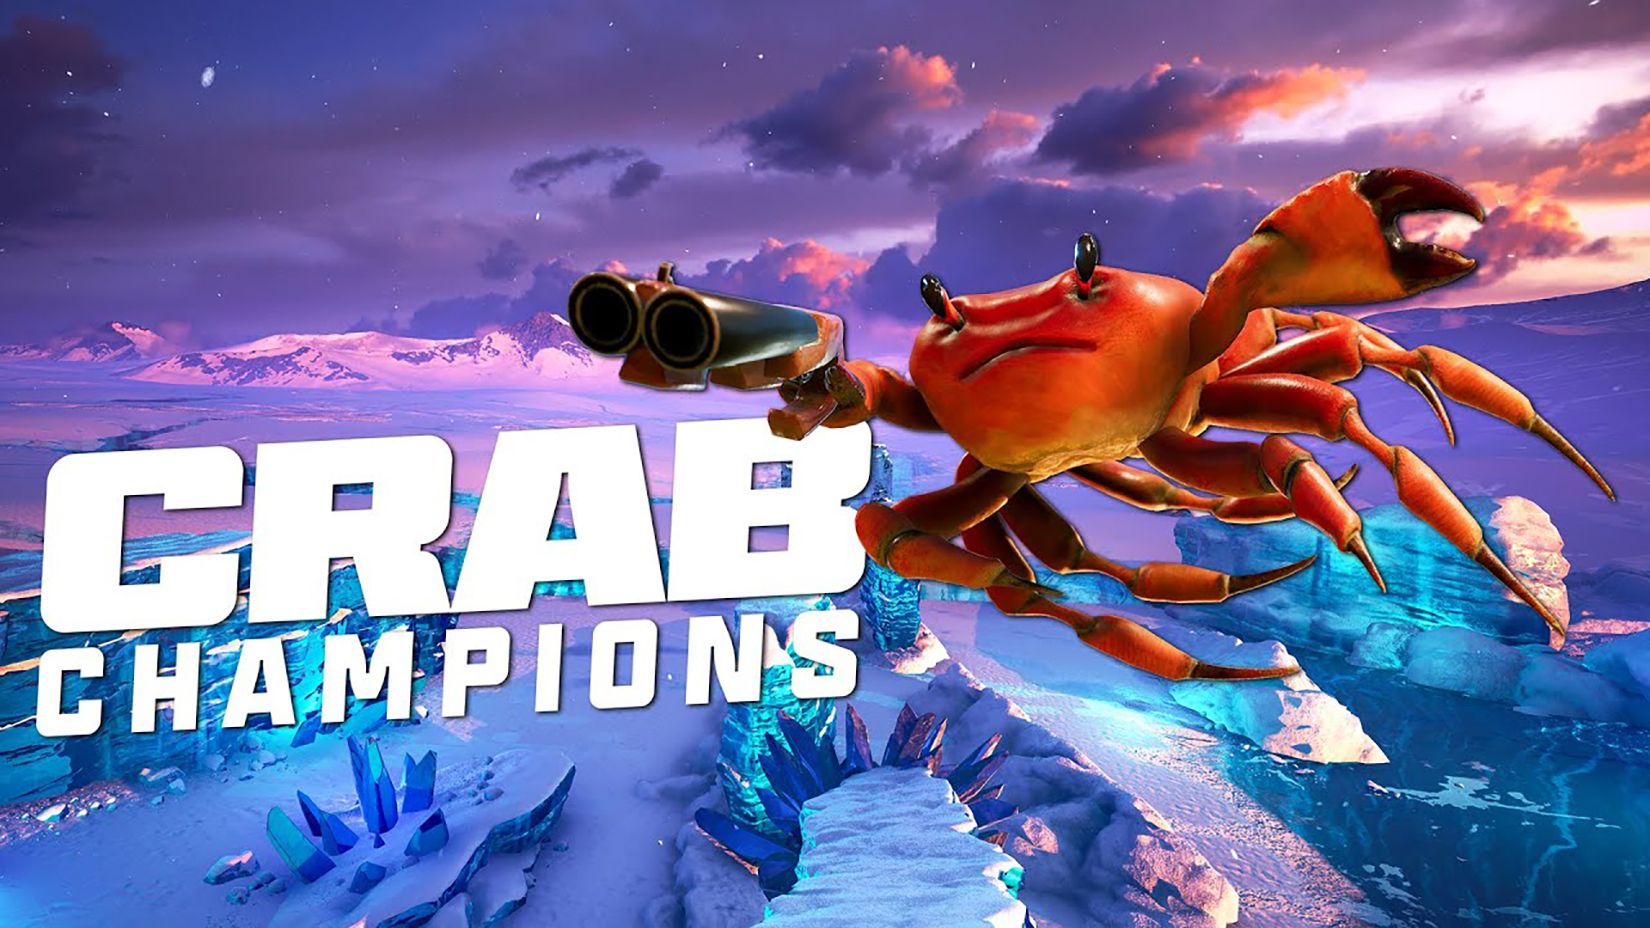 crab game online download